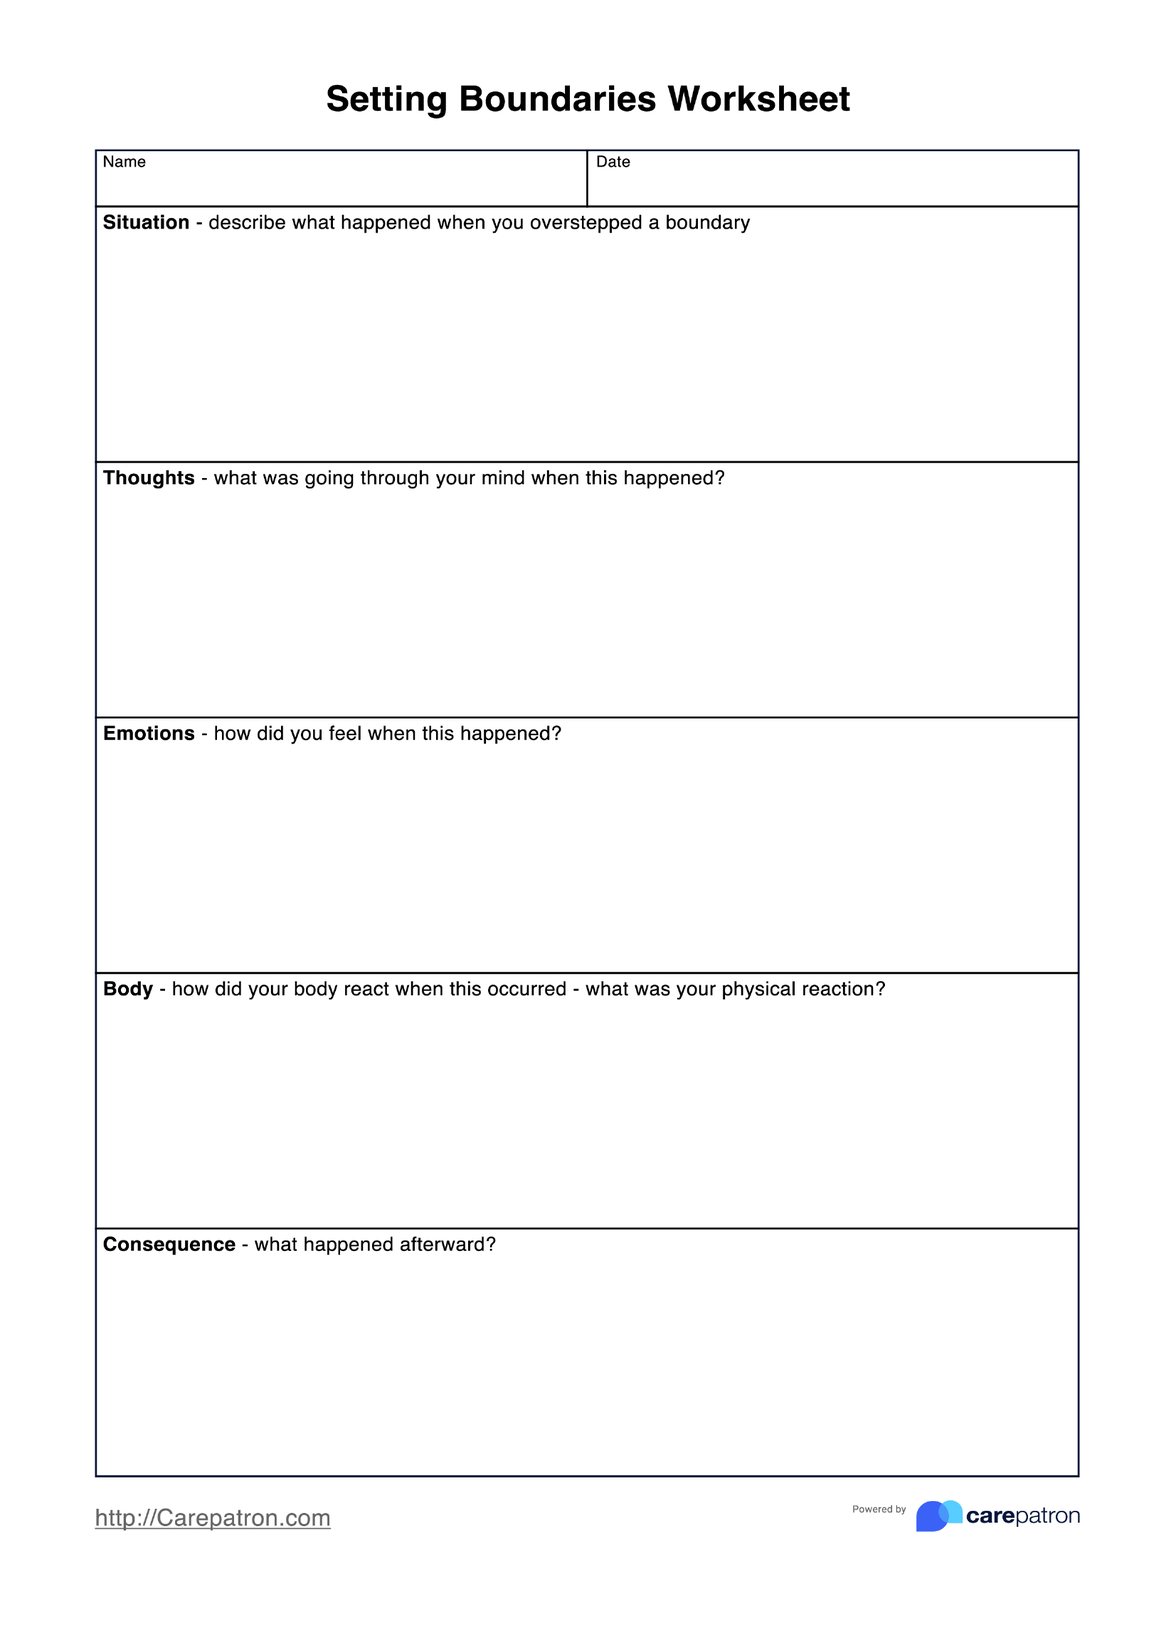 Setting Boundaries Worksheets PDF Example